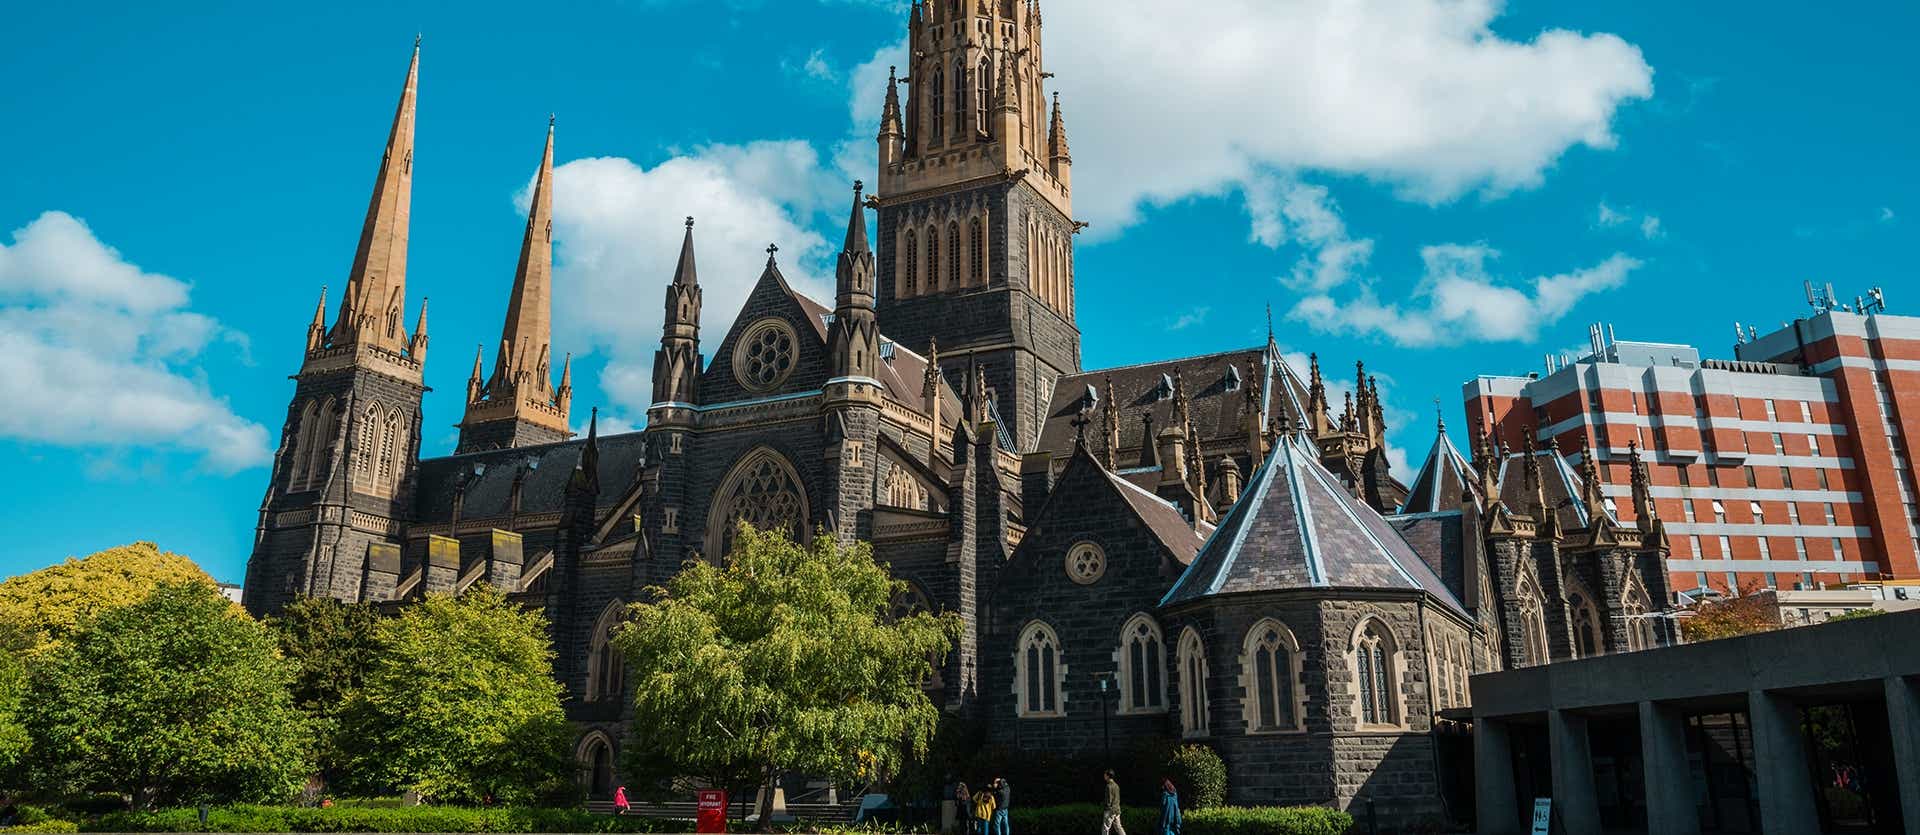 St. Patrick's Cathedral <span class="iconos separador"></span> Melbourne